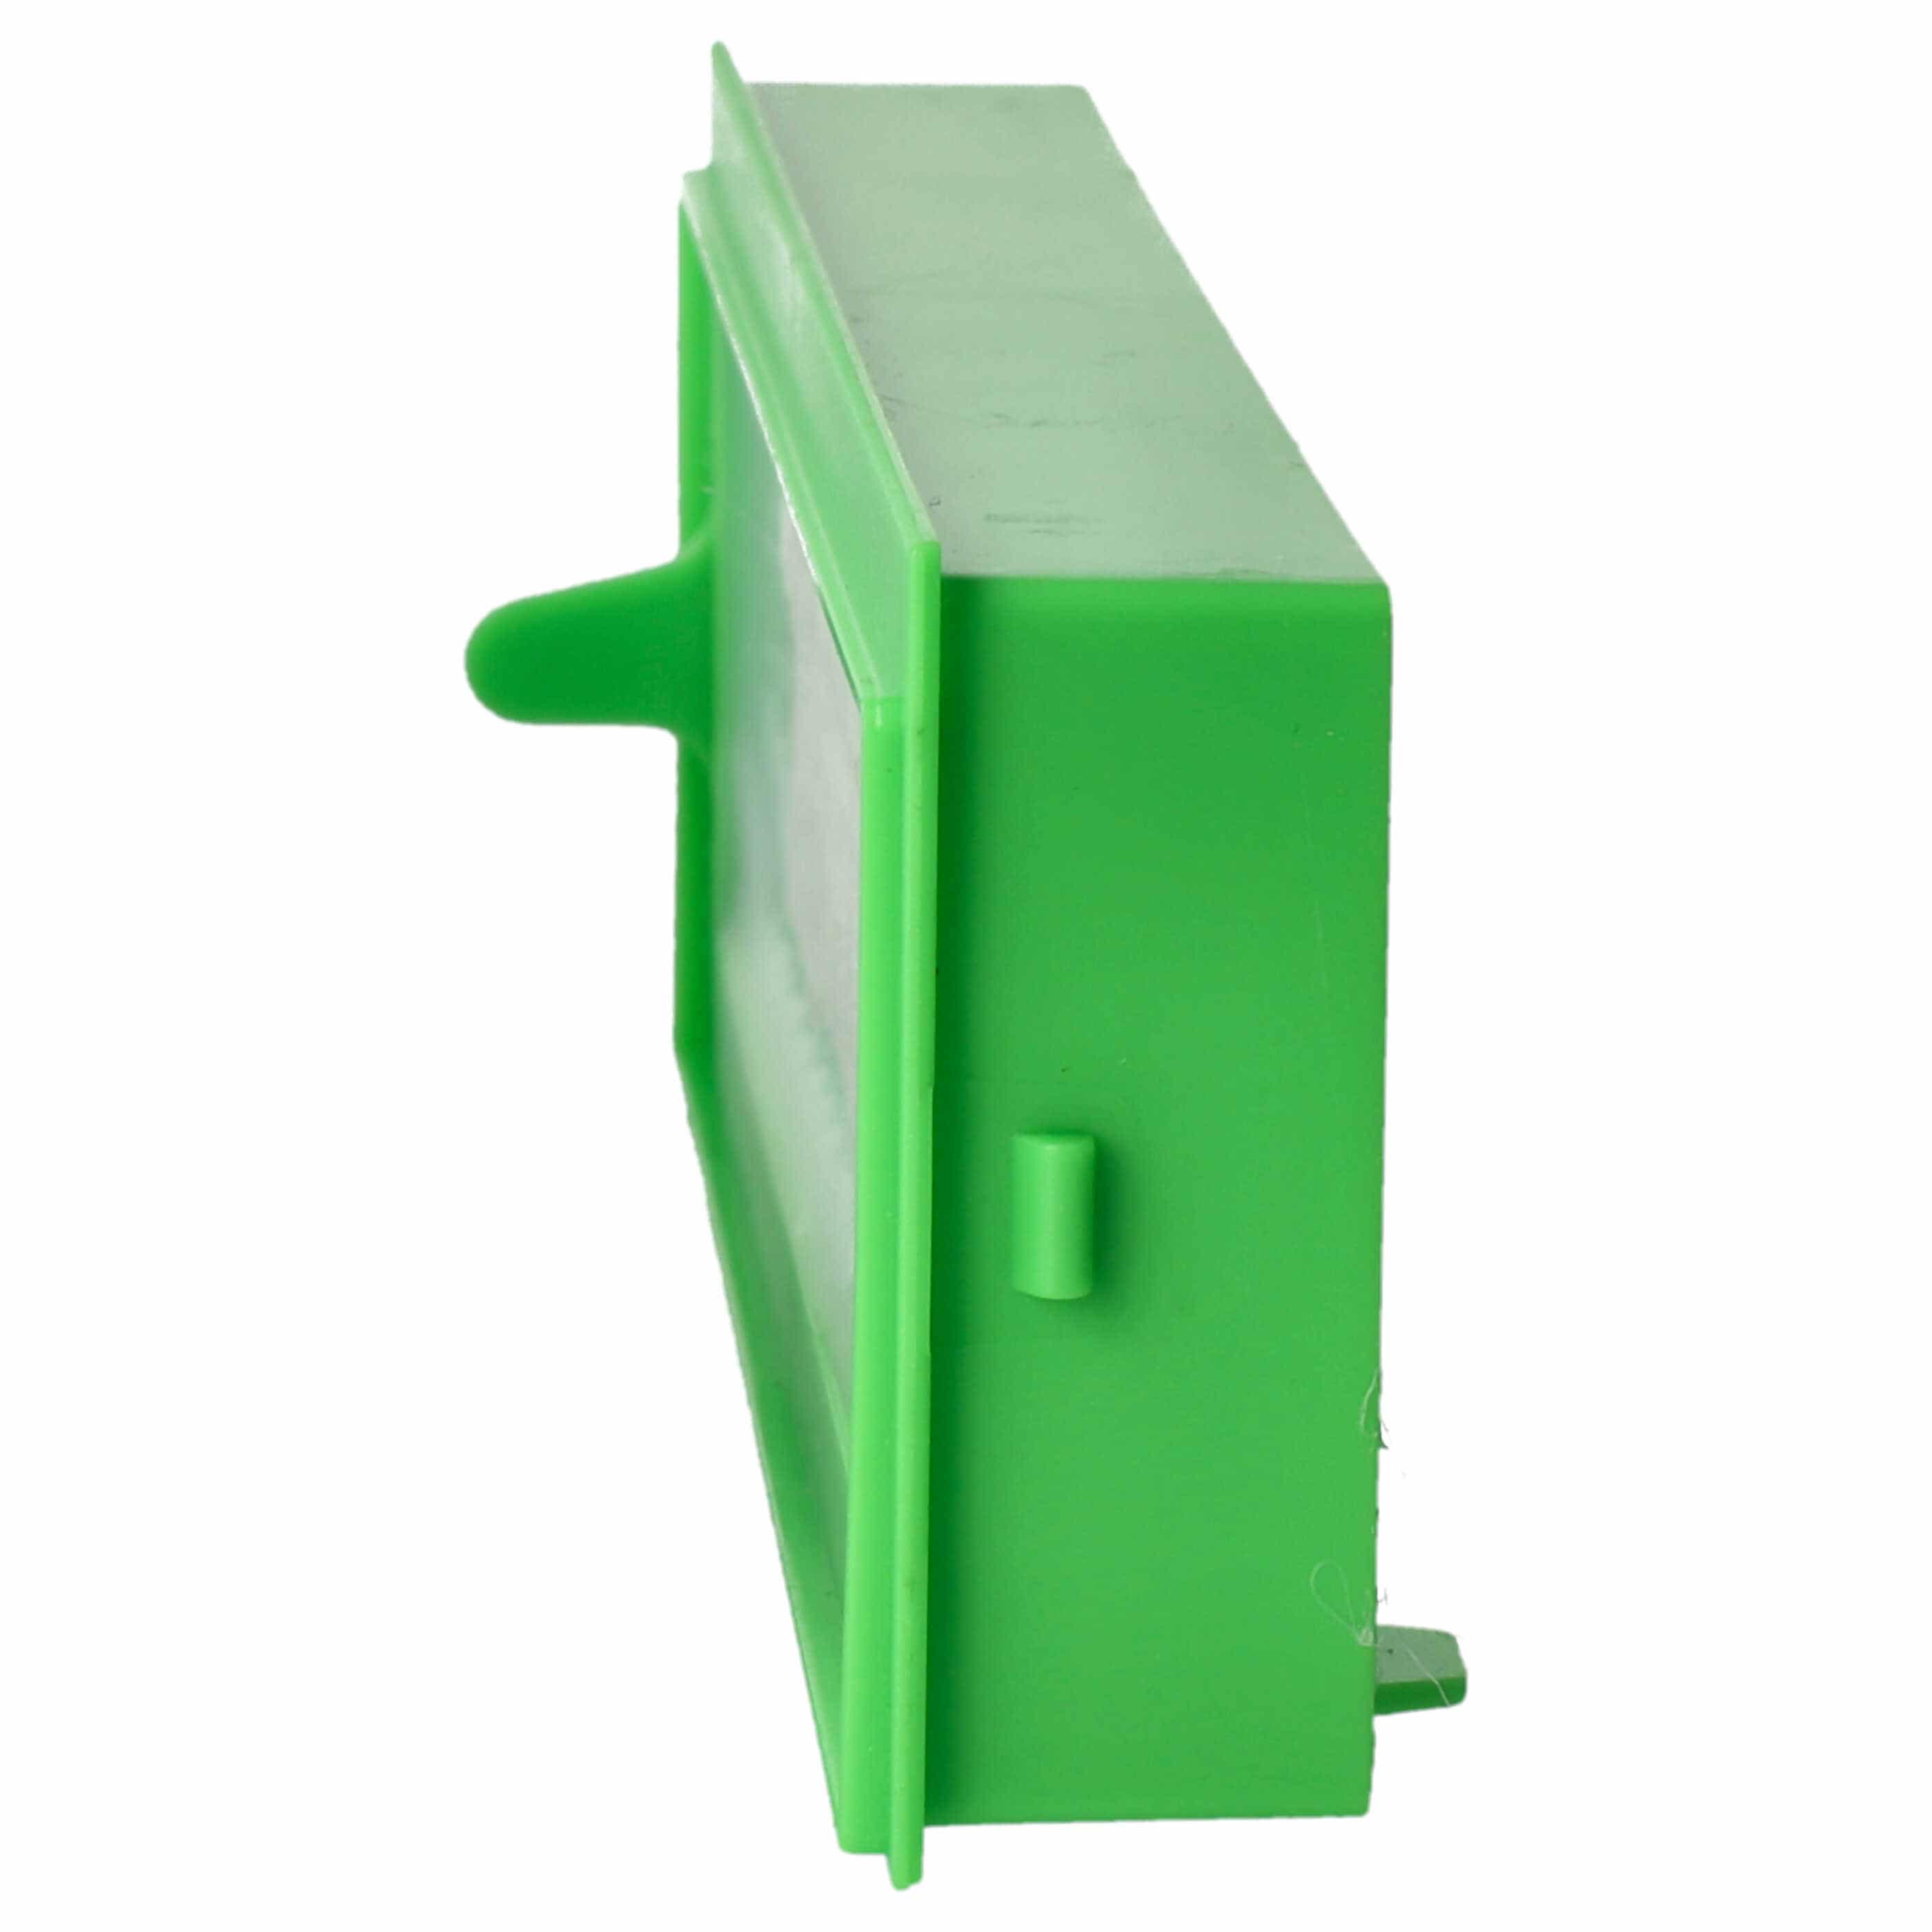 3x Filtro per aspirapolvere Vorwerk folletto - filtro HEPA, bianco / verde